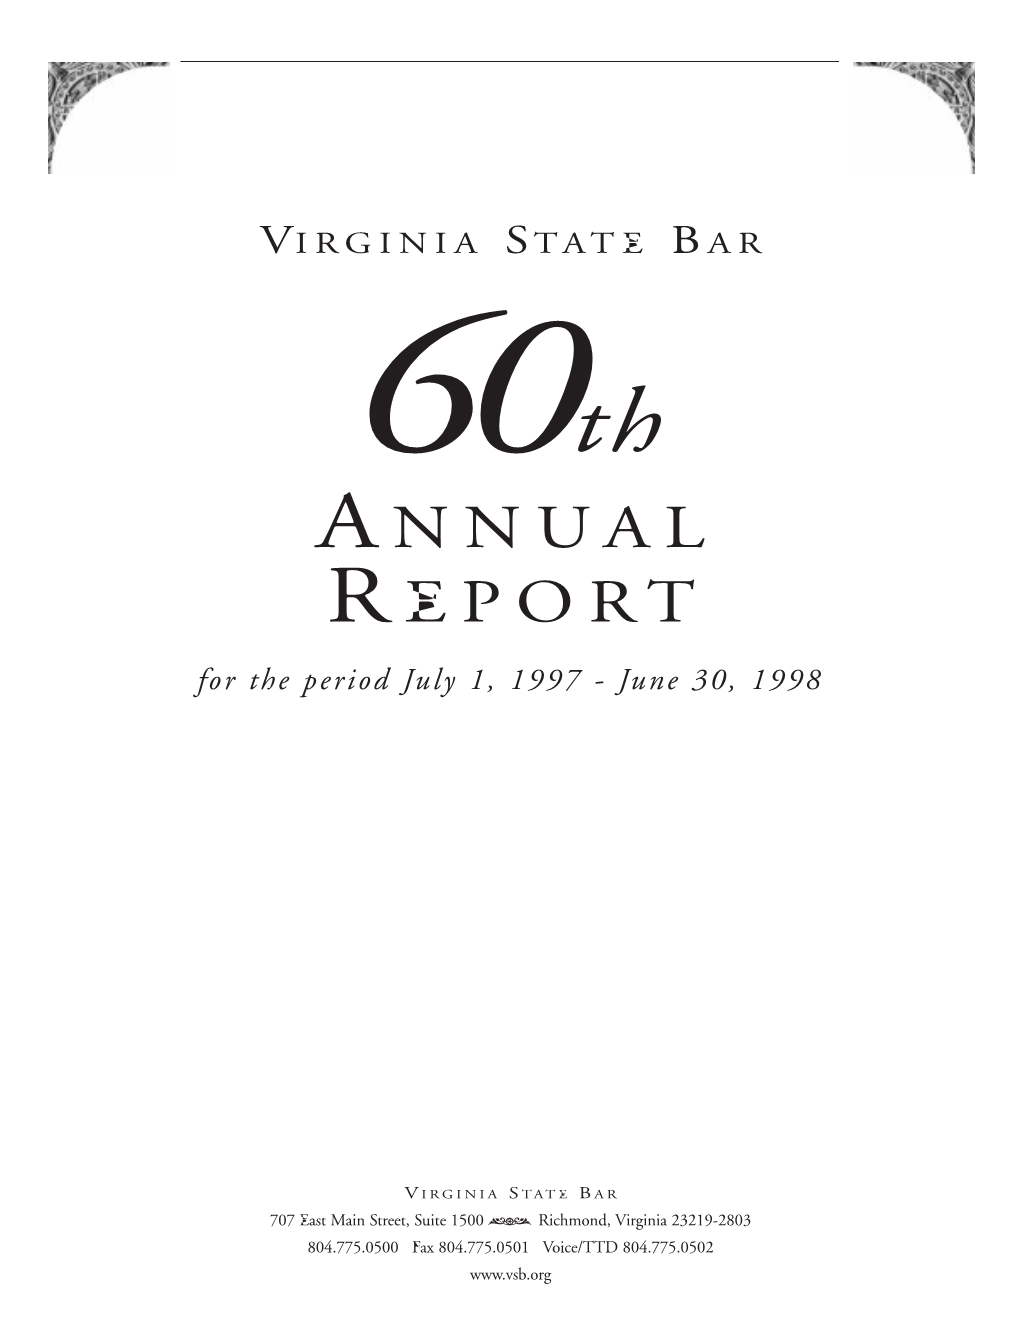 1998-1997 Annual Report